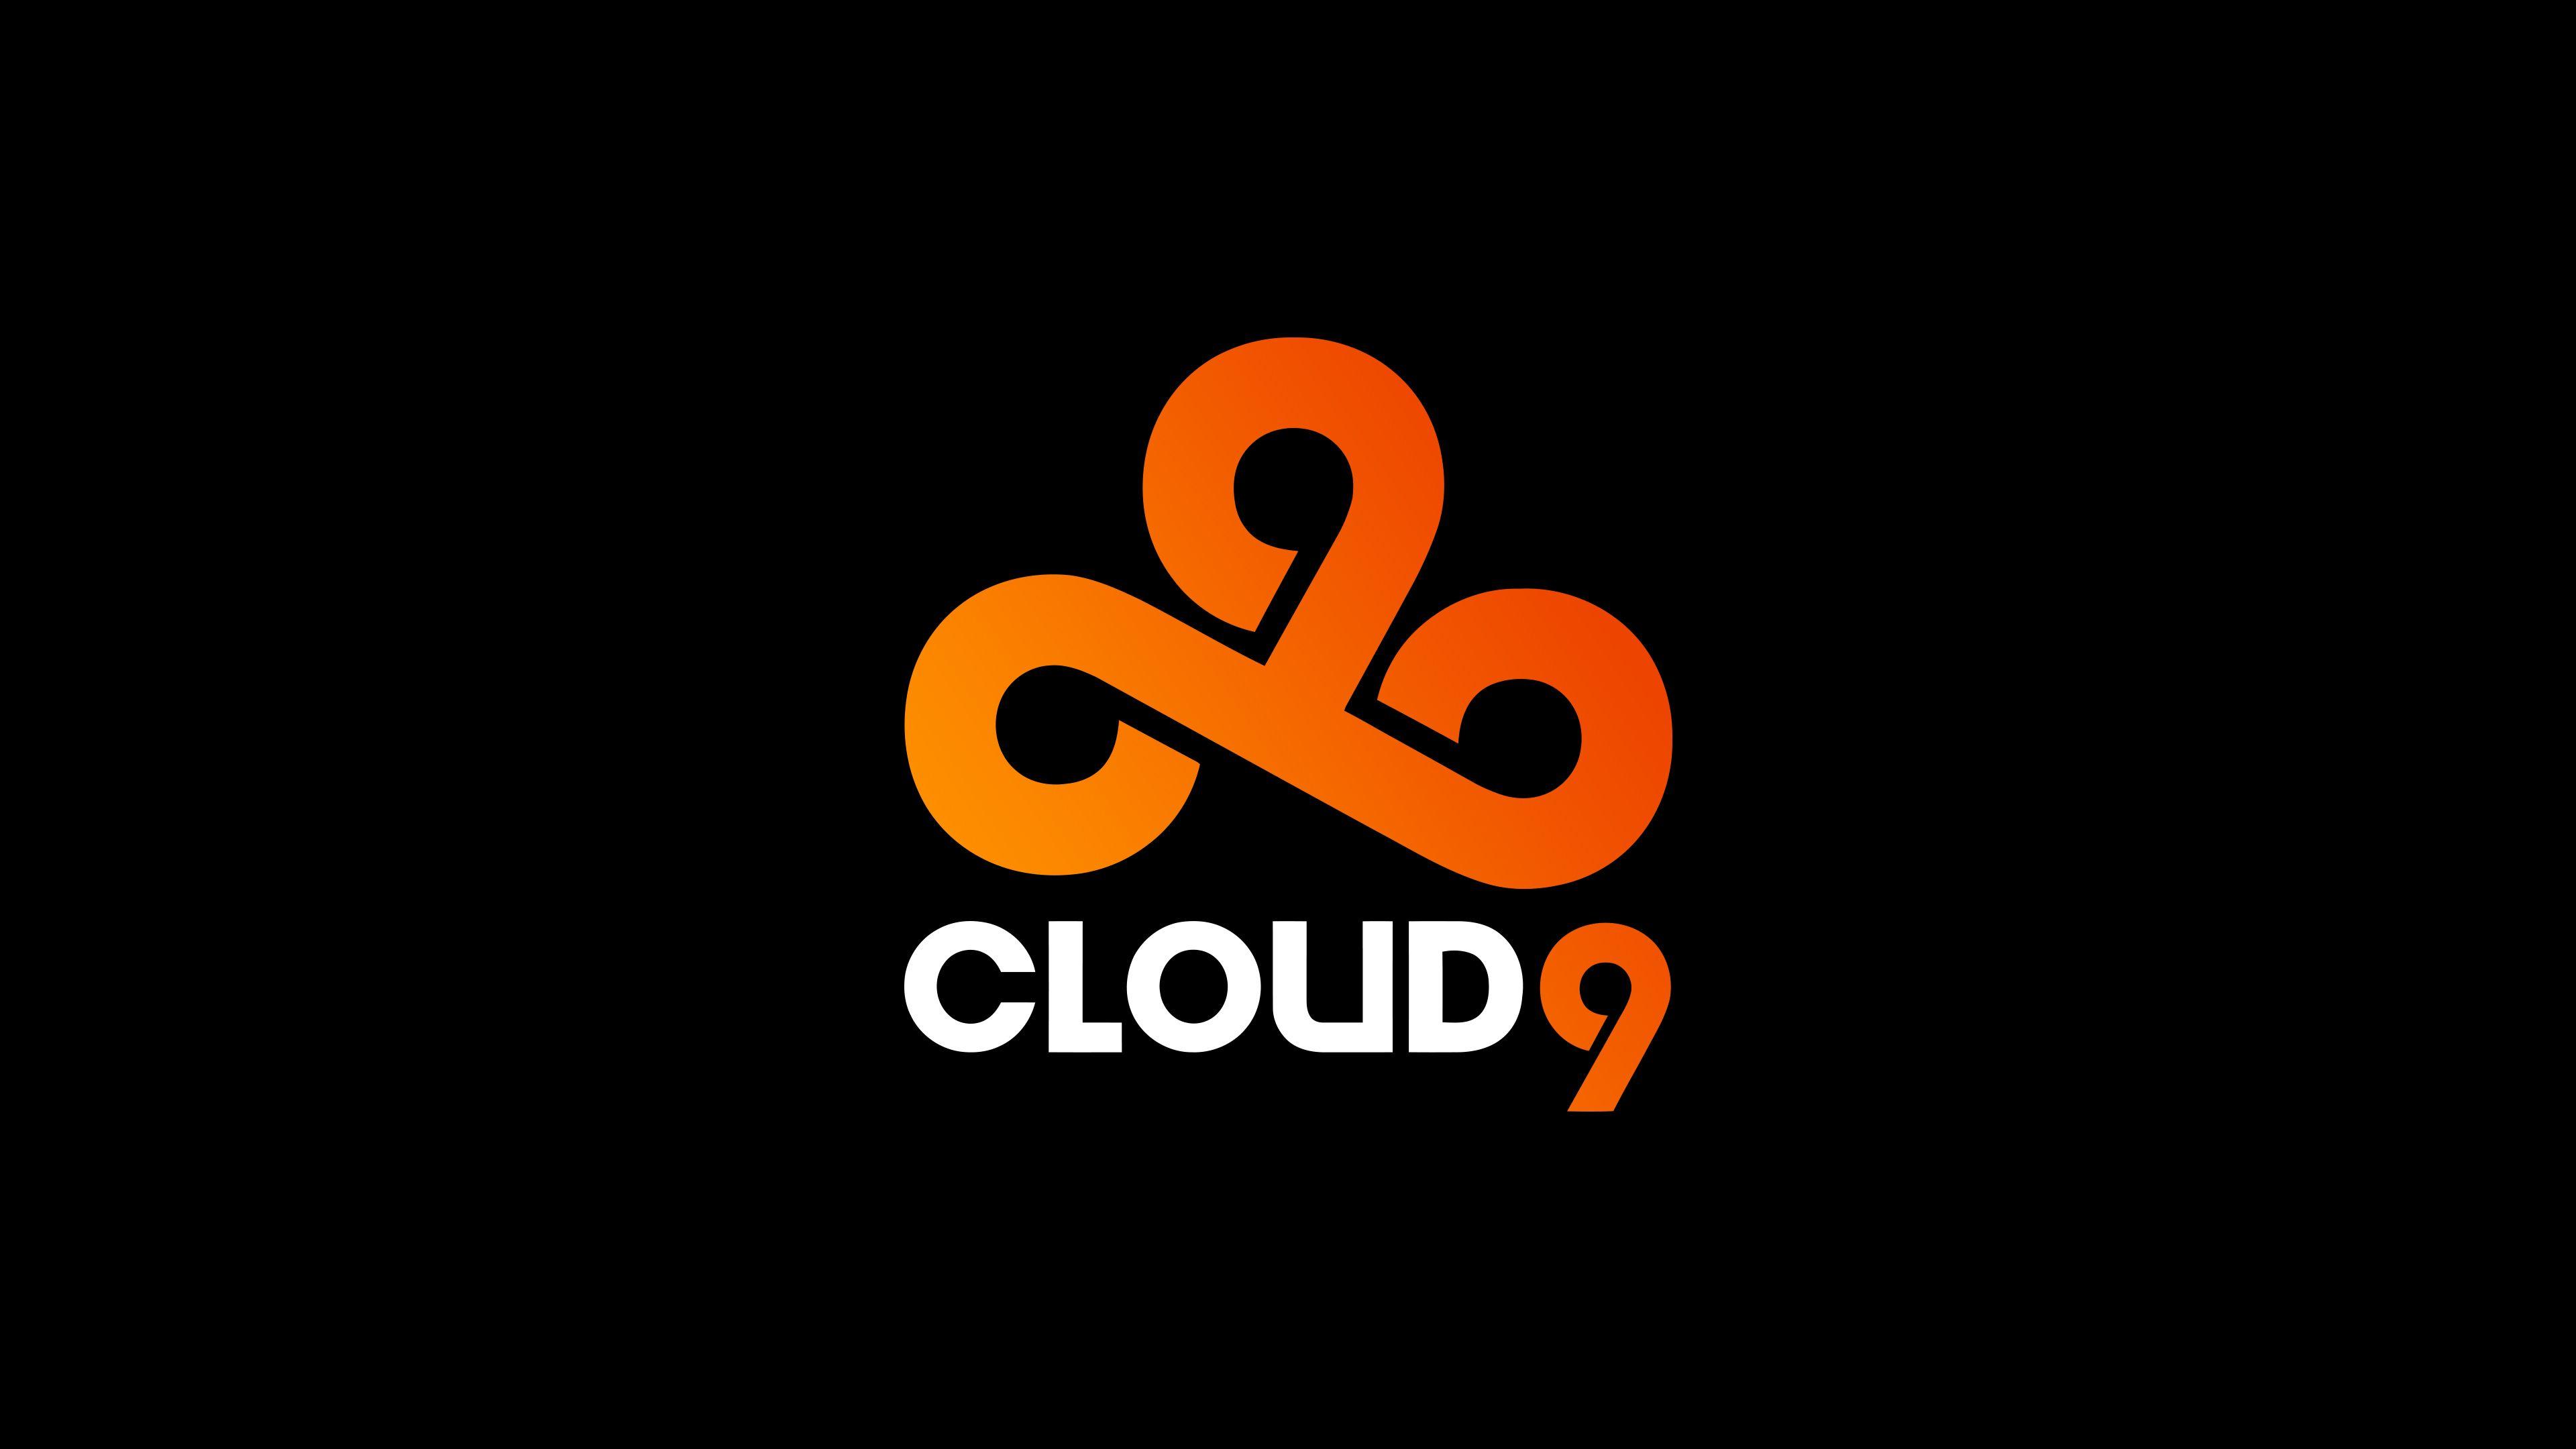 Orange Cloud Logo - Cloud 9 - LoLWallpapers